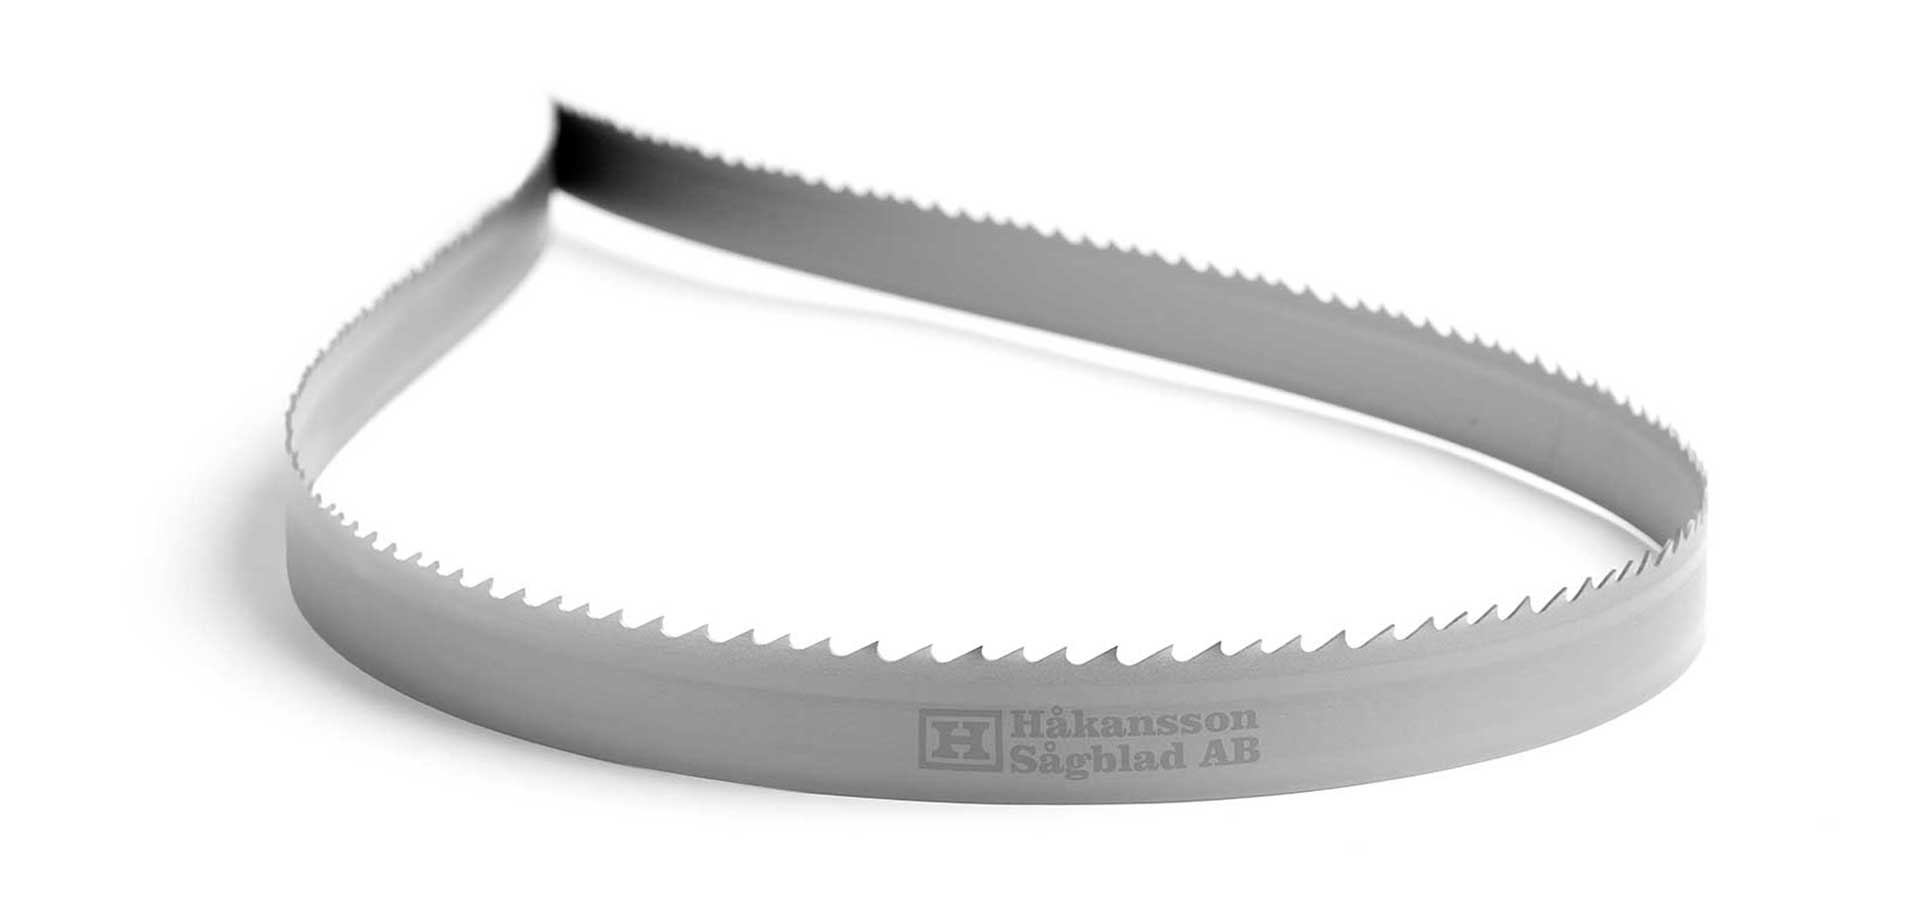 Hakansson Metal Blade M42 Allpower